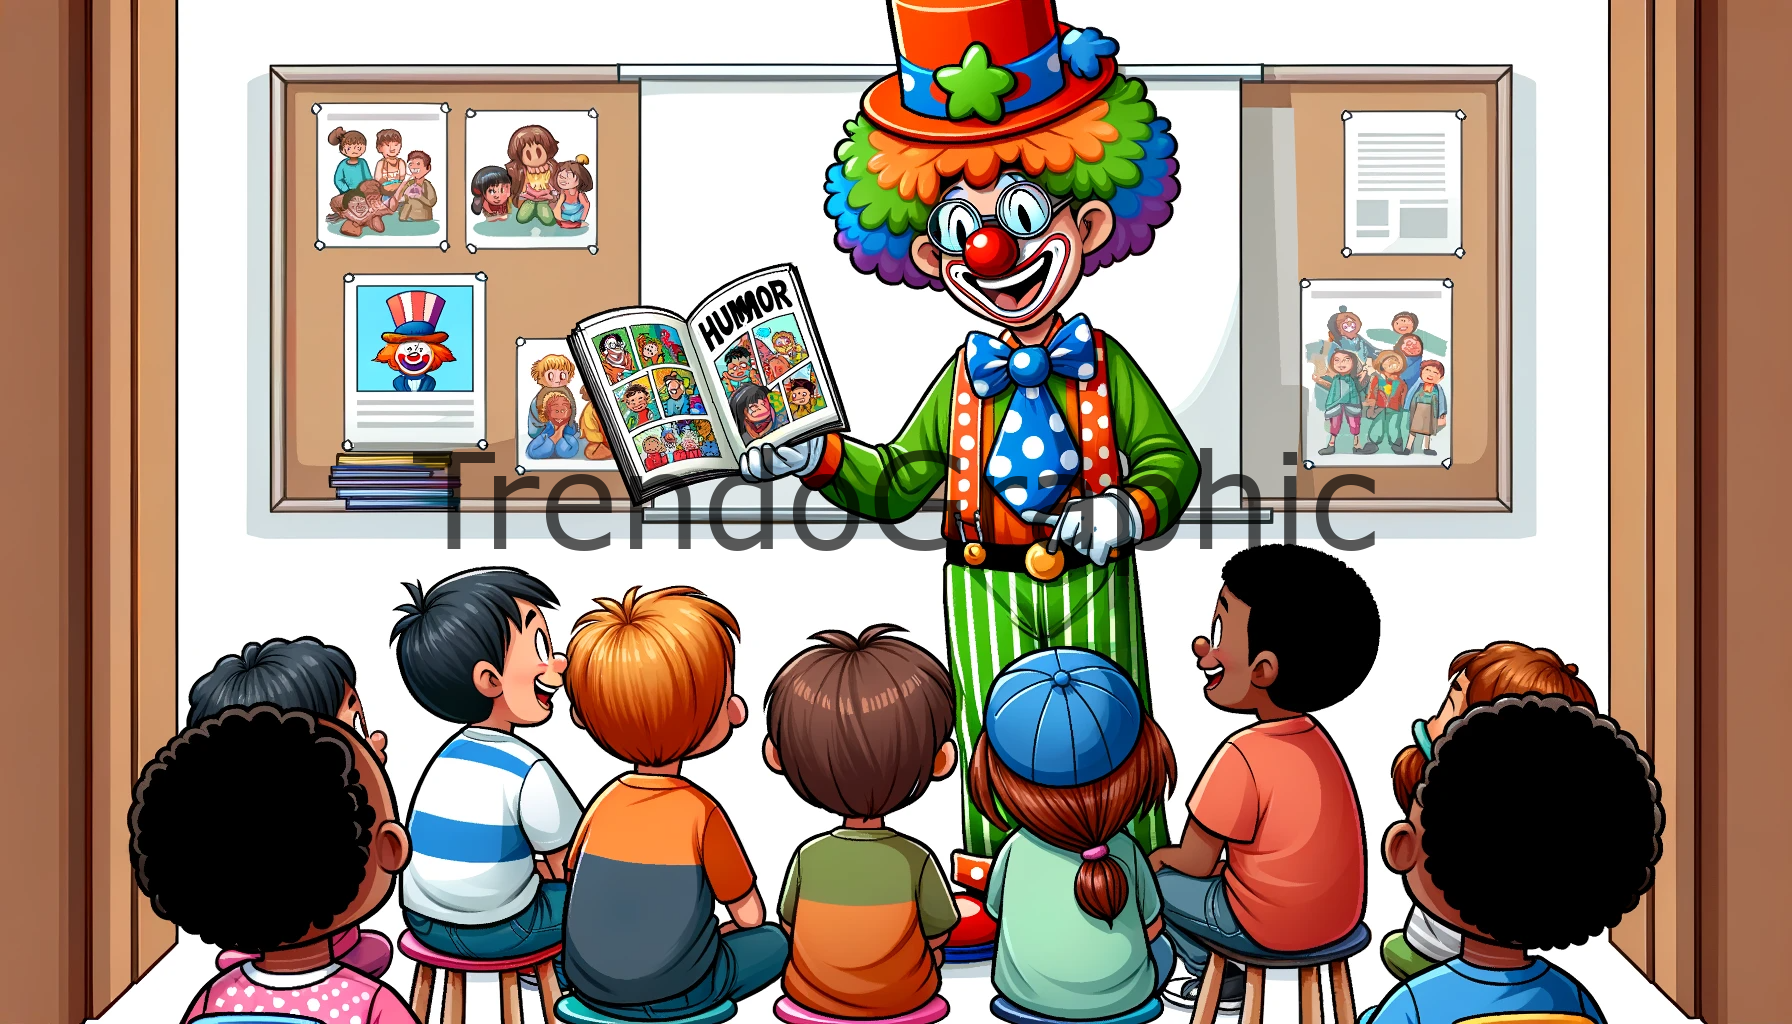 Clown’s Creative Classroom: Teaching Humor through Comics